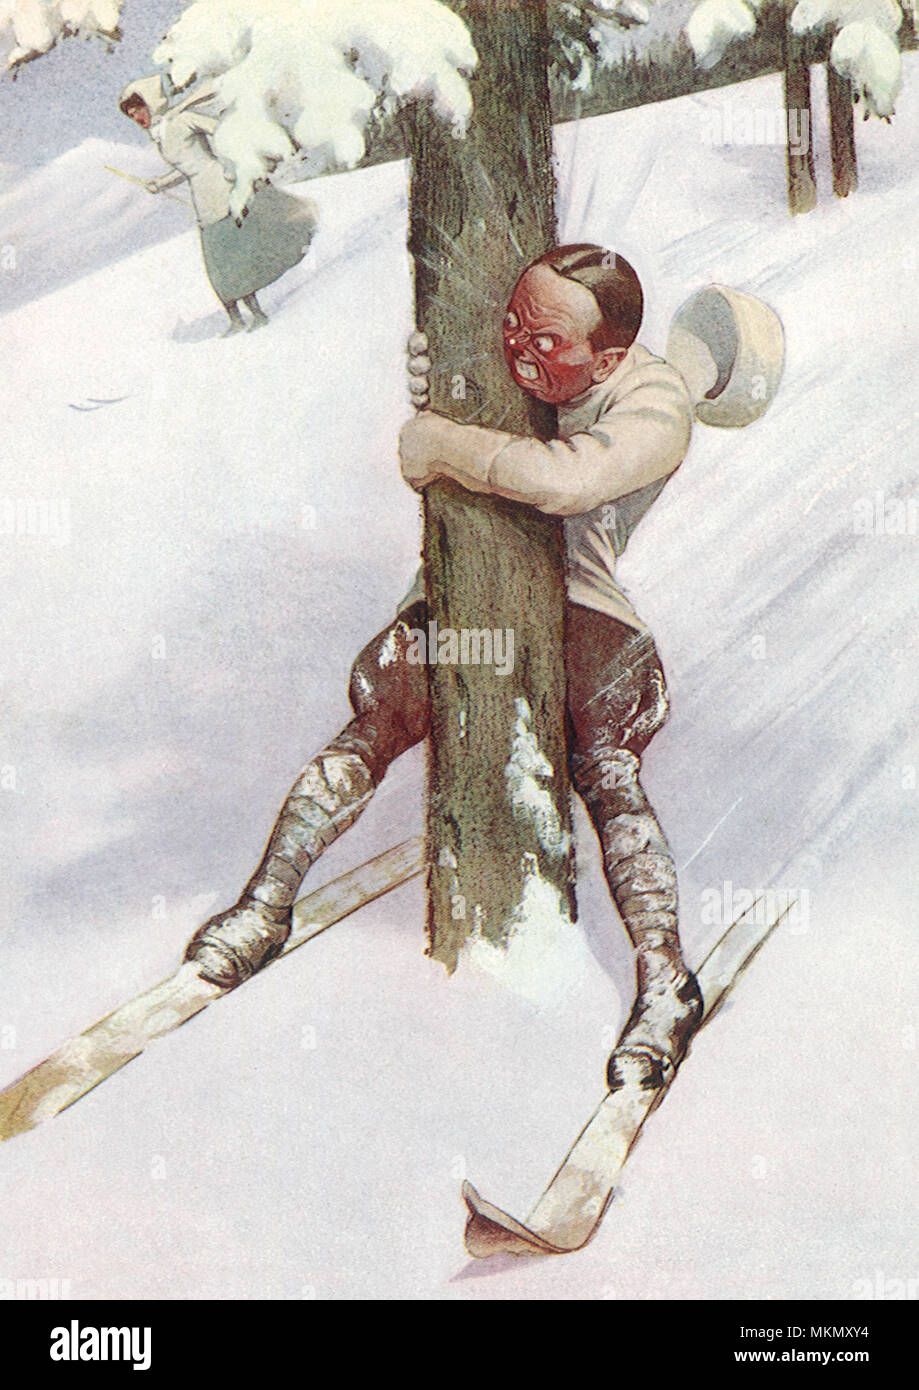 Skier Stops Tree with Body Stock Photo